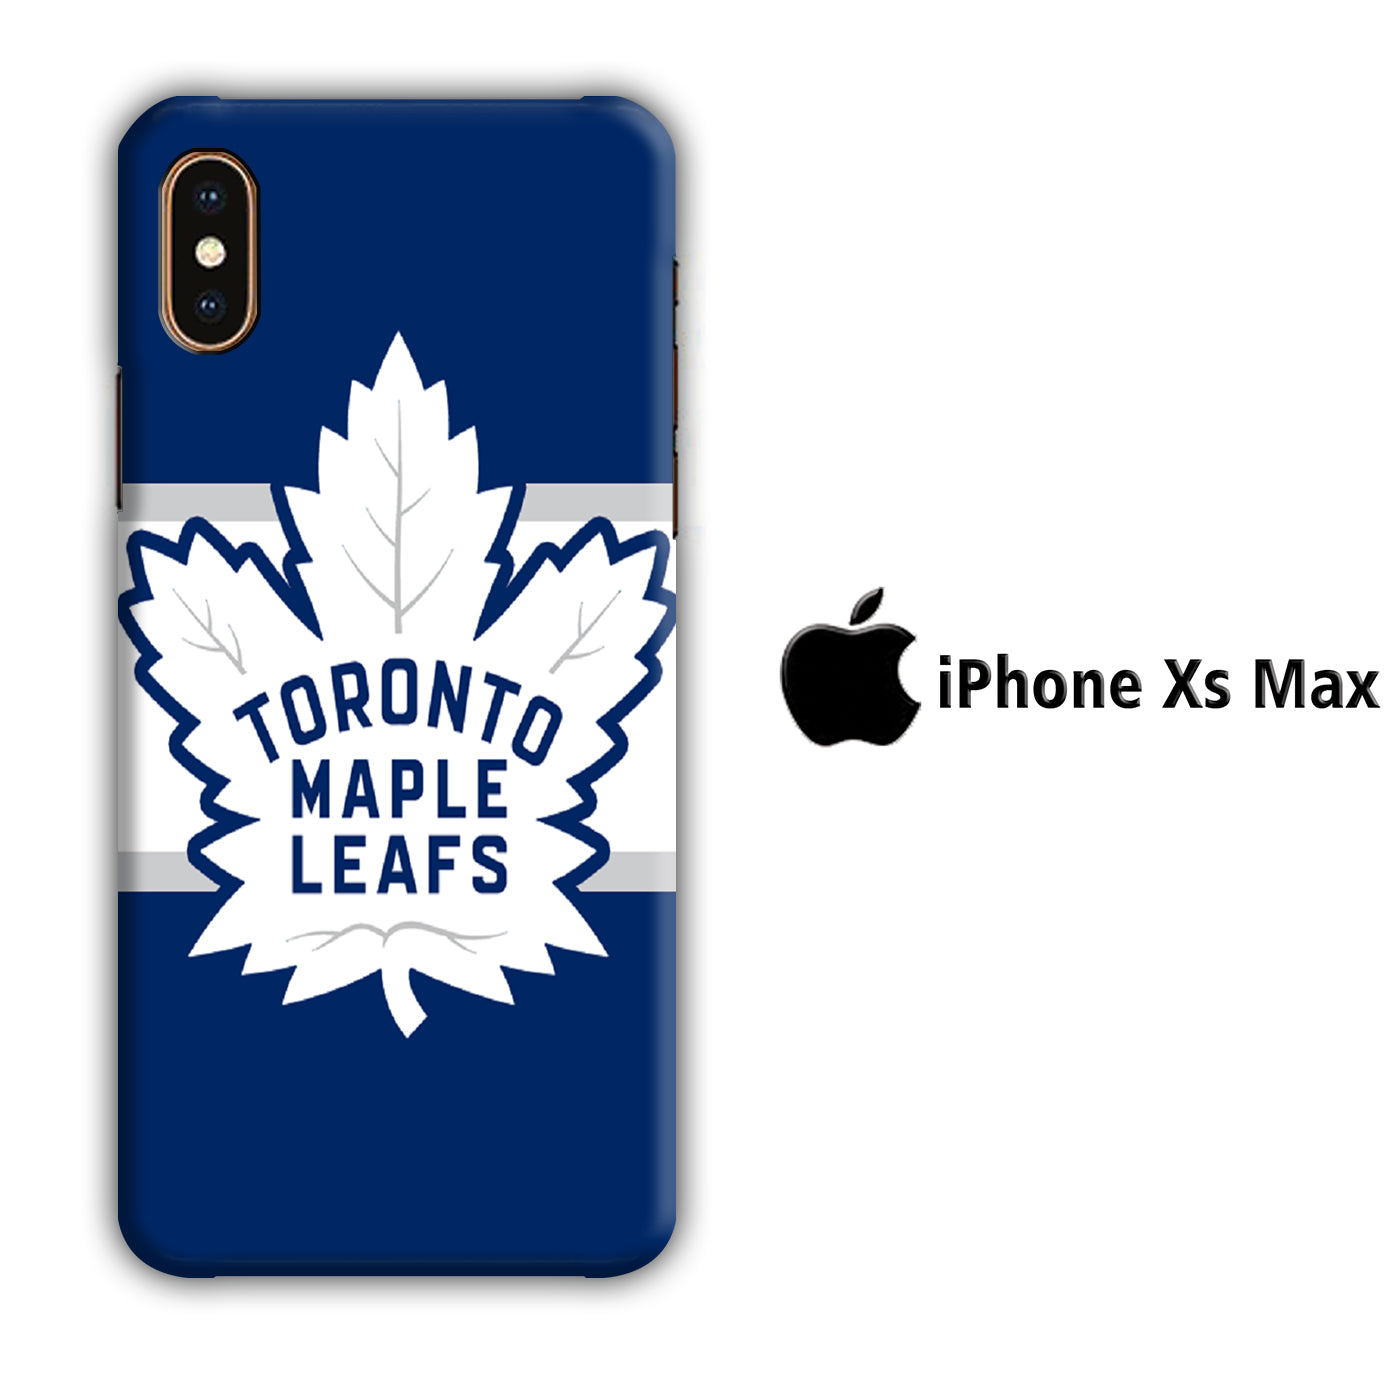 Hokkey Toronto Maple Leafs iPhone Xs Max 3D Case